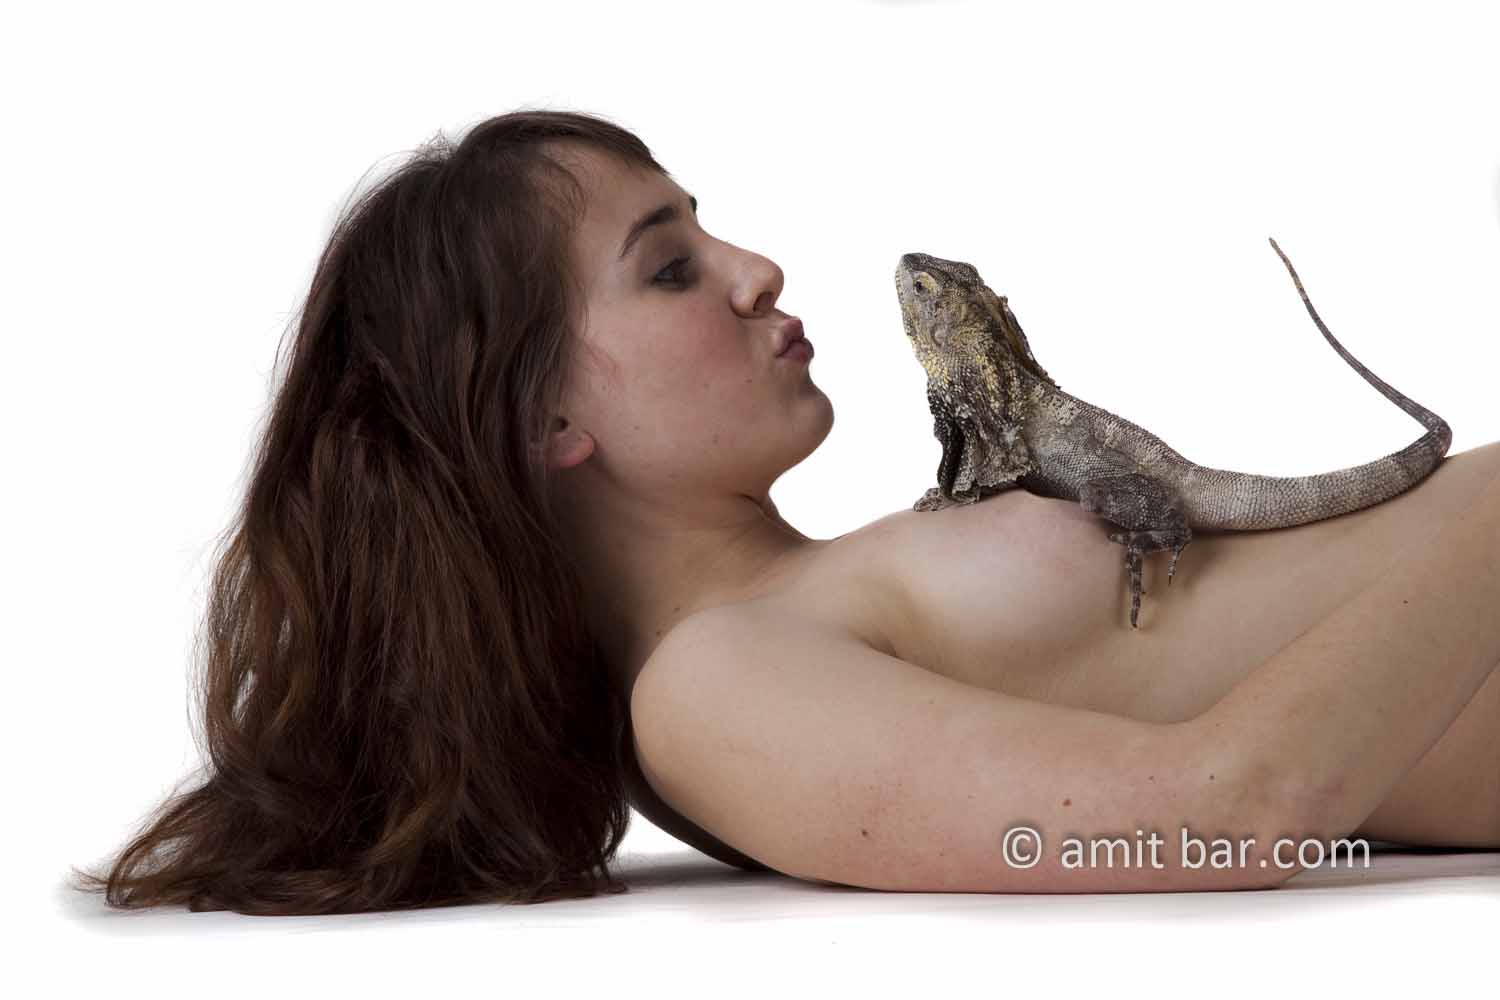 Collar lizard: Nude model with collar lizard